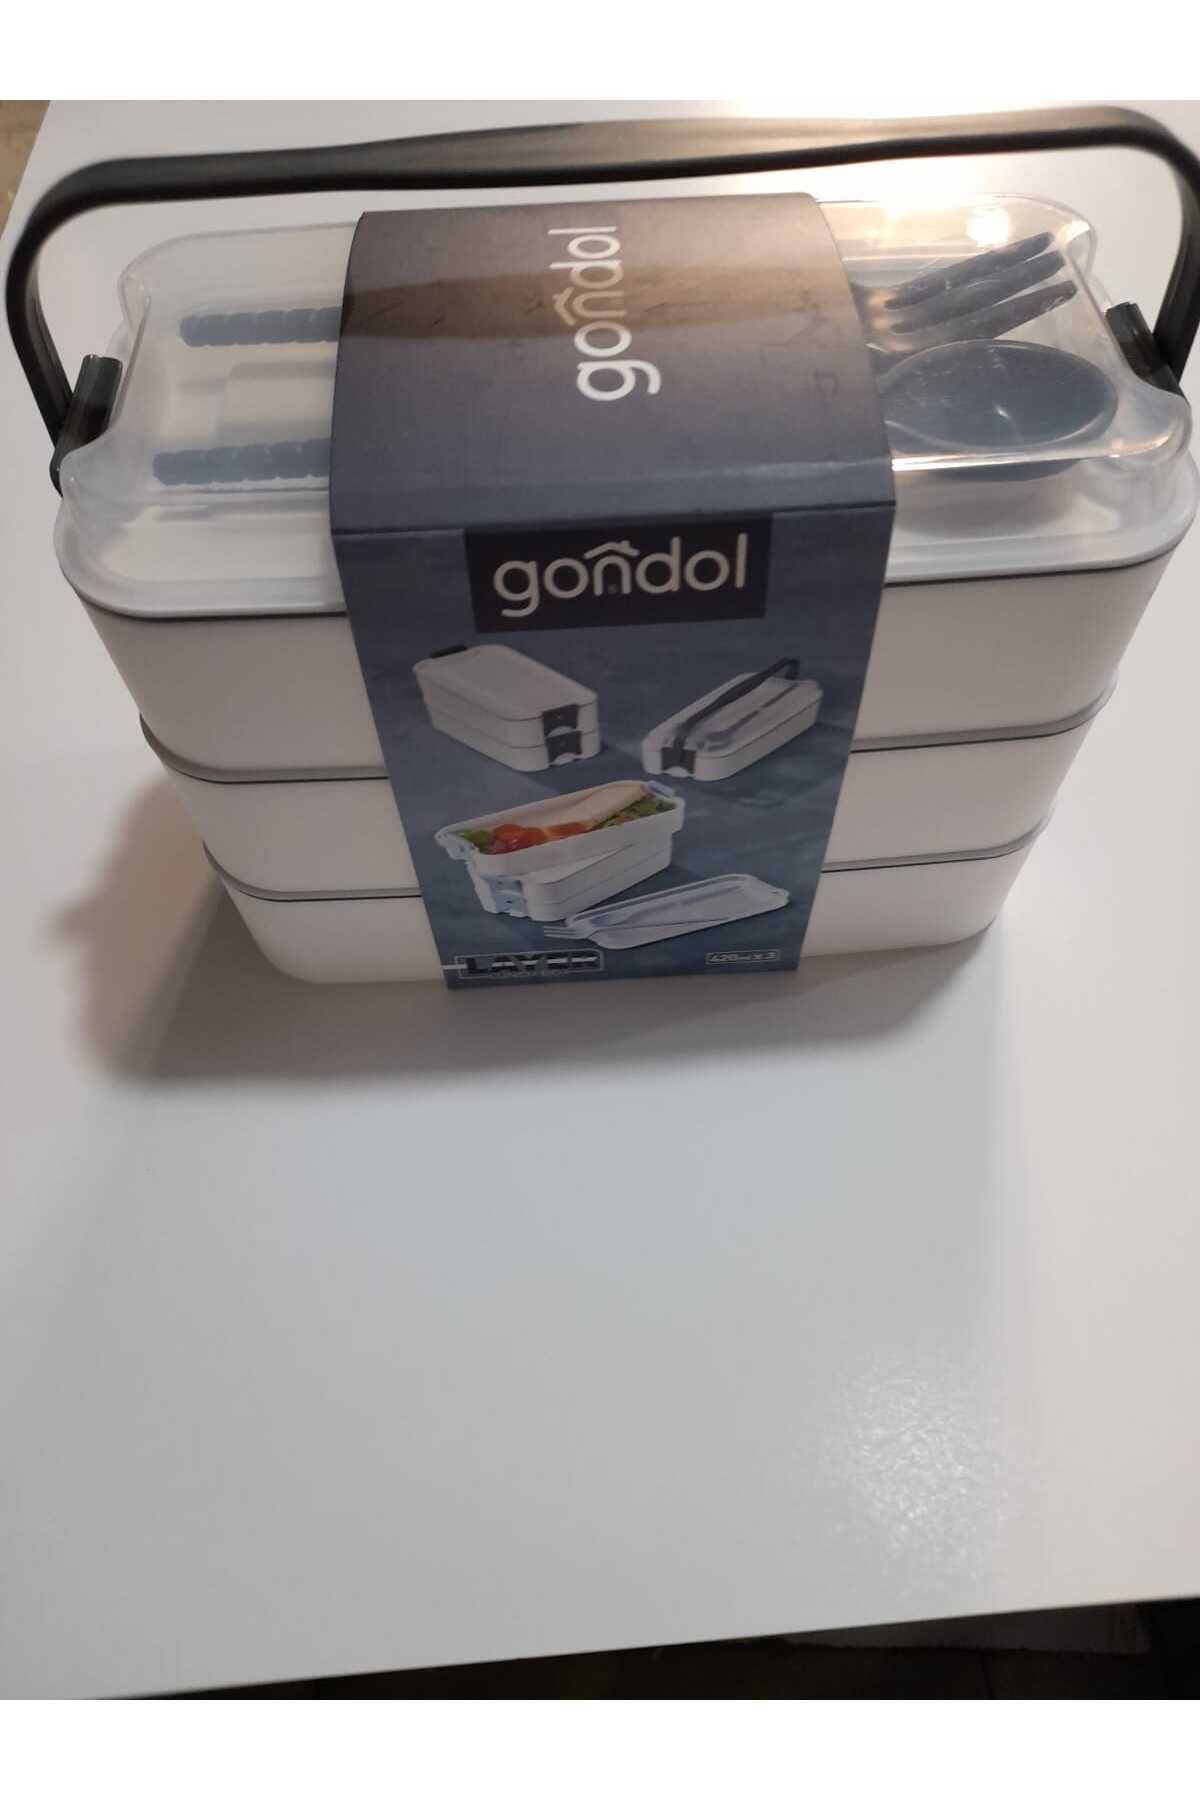 Gondol Plastik Reis Home 3 Katlı Beslenme Kabı Çatal kaşık içerisinde GRİ RENK